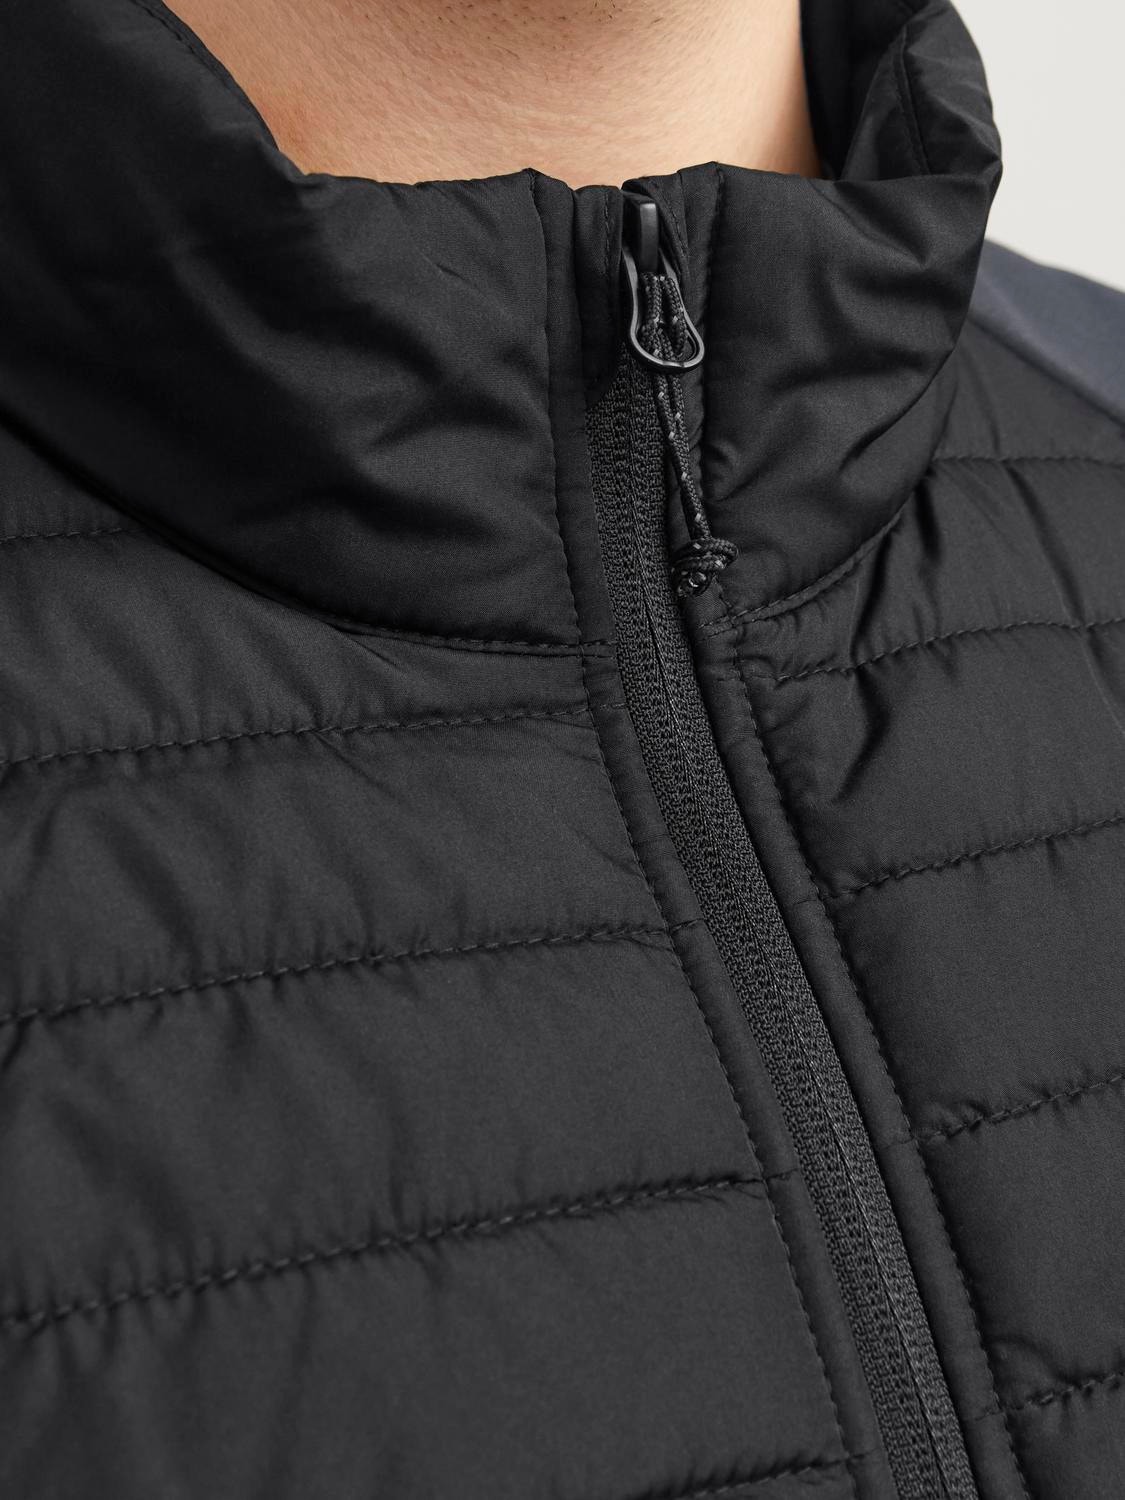 Jack & Jones Plus Size Hybrid jacket -Black - 12253852